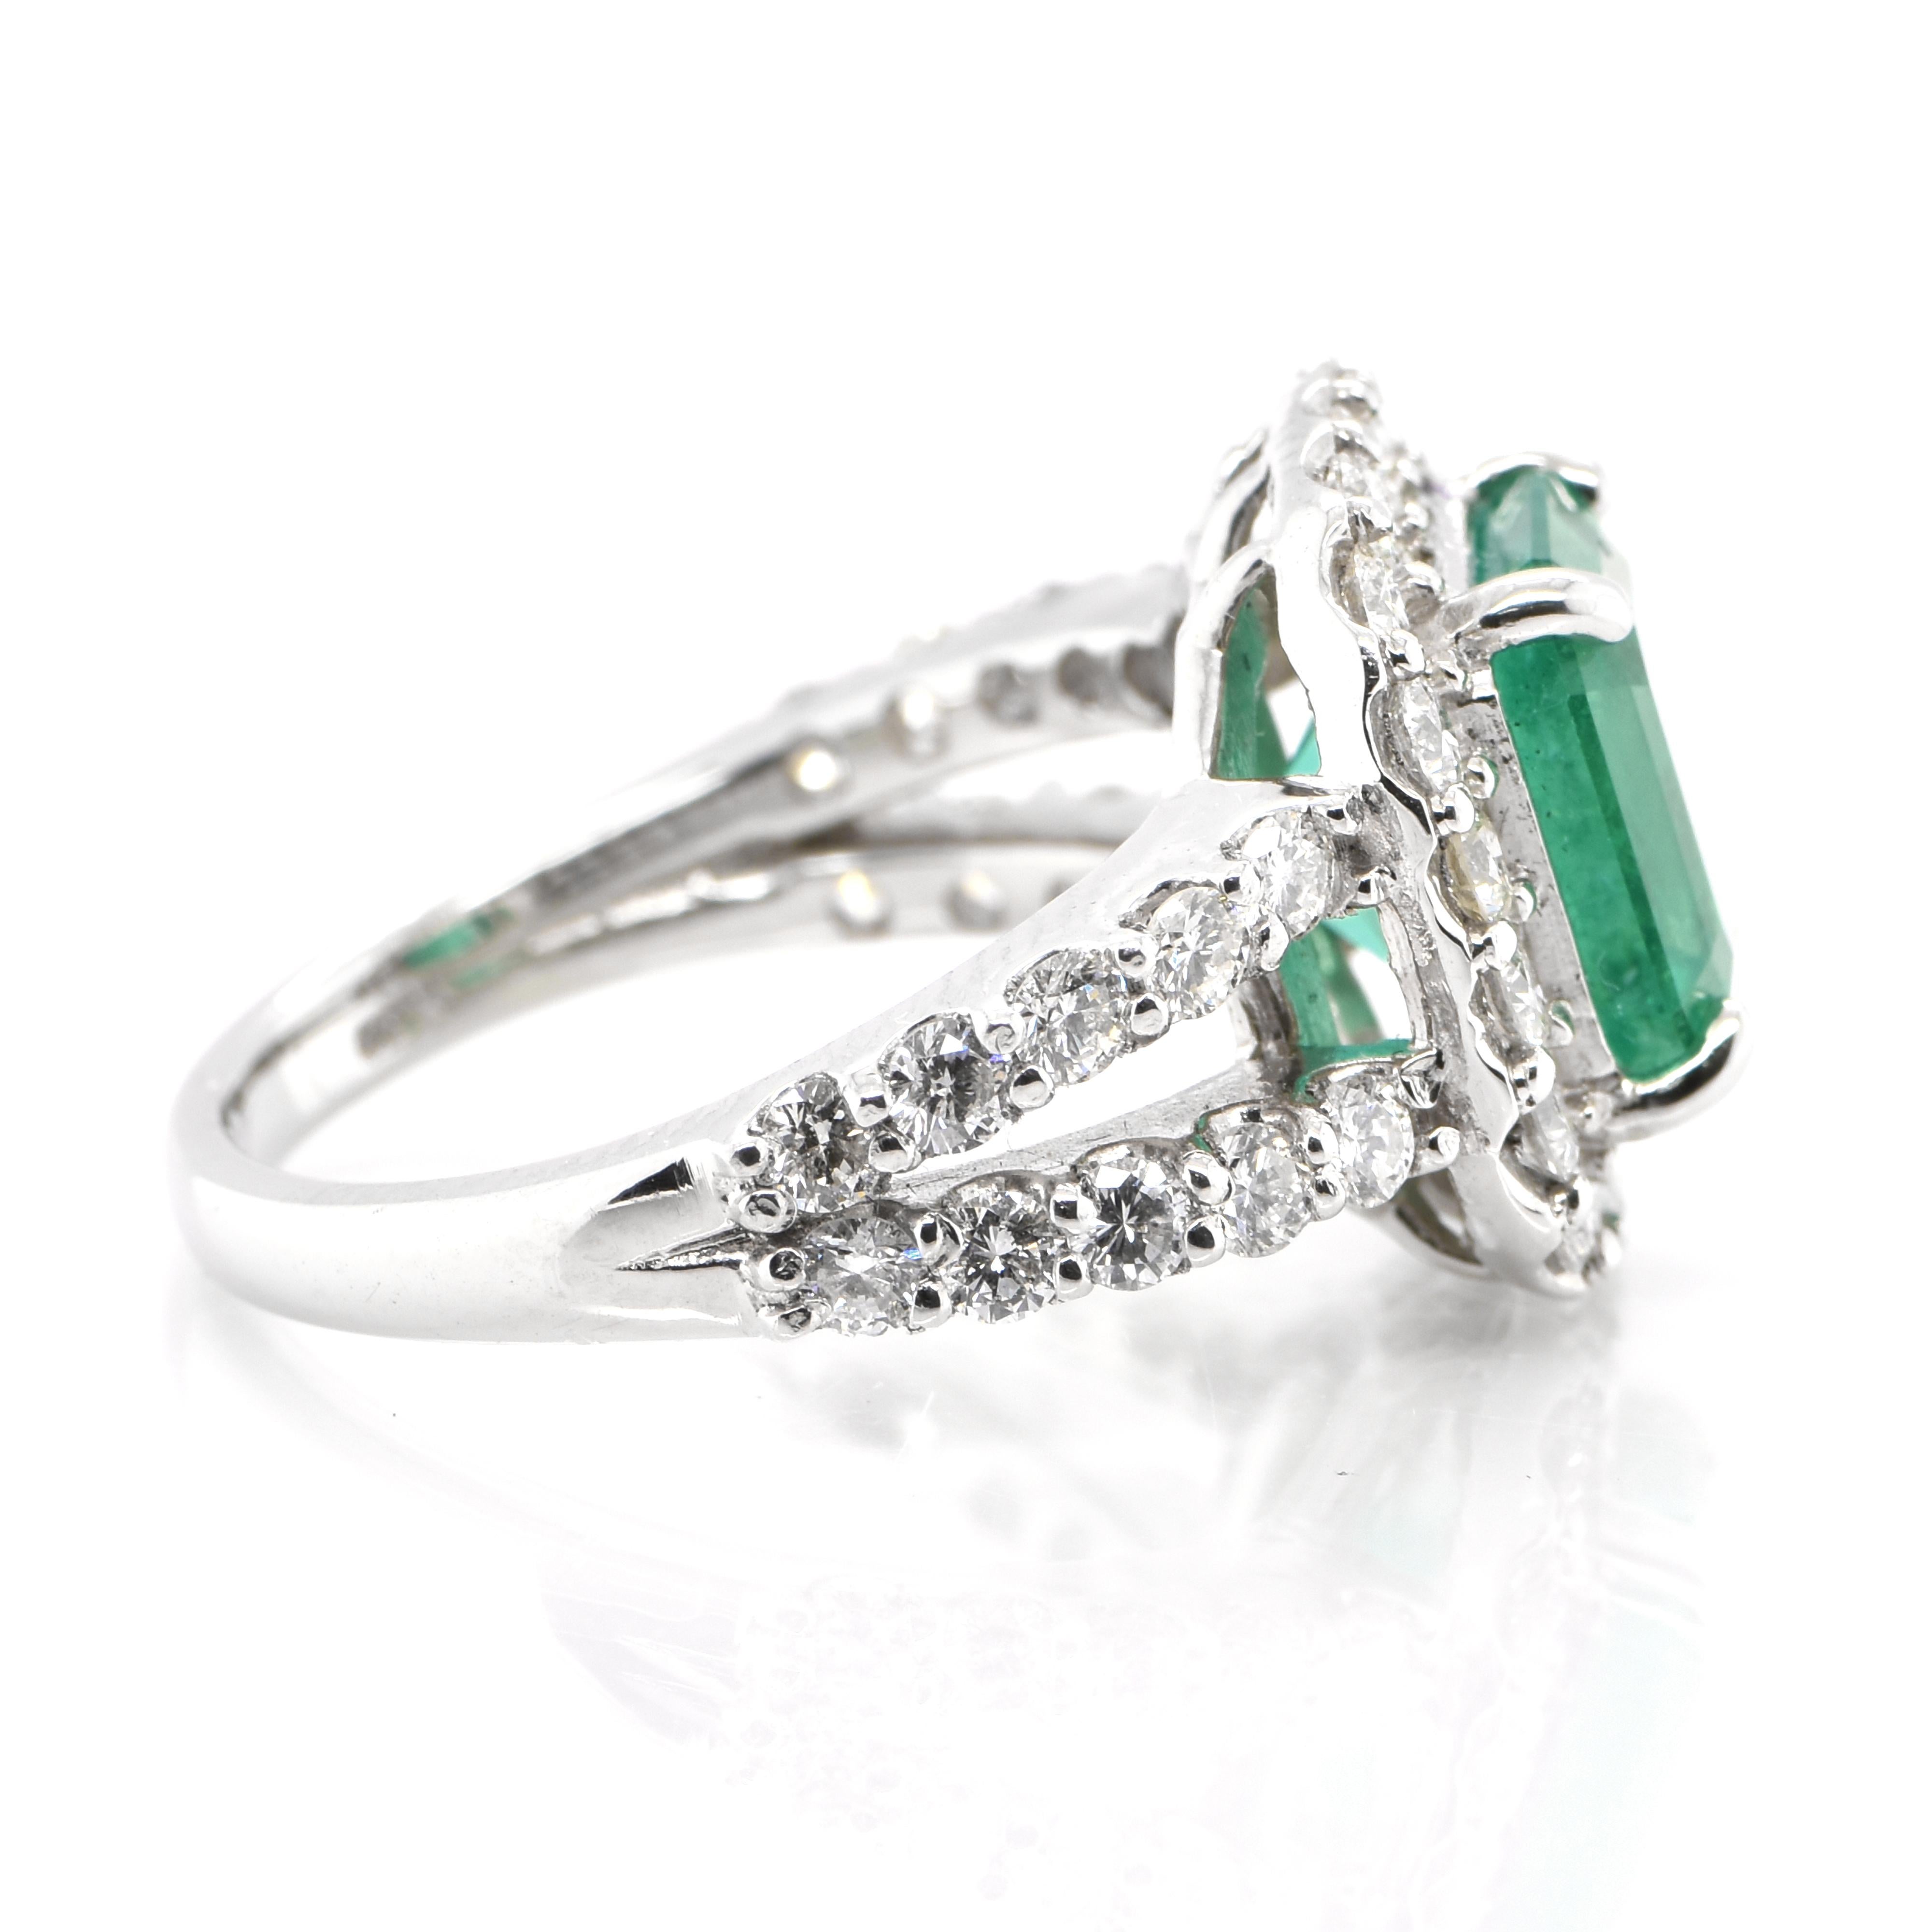 Women's 2.90 Carat Natural Emerald and Diamond Halo Ring Set in Platinum